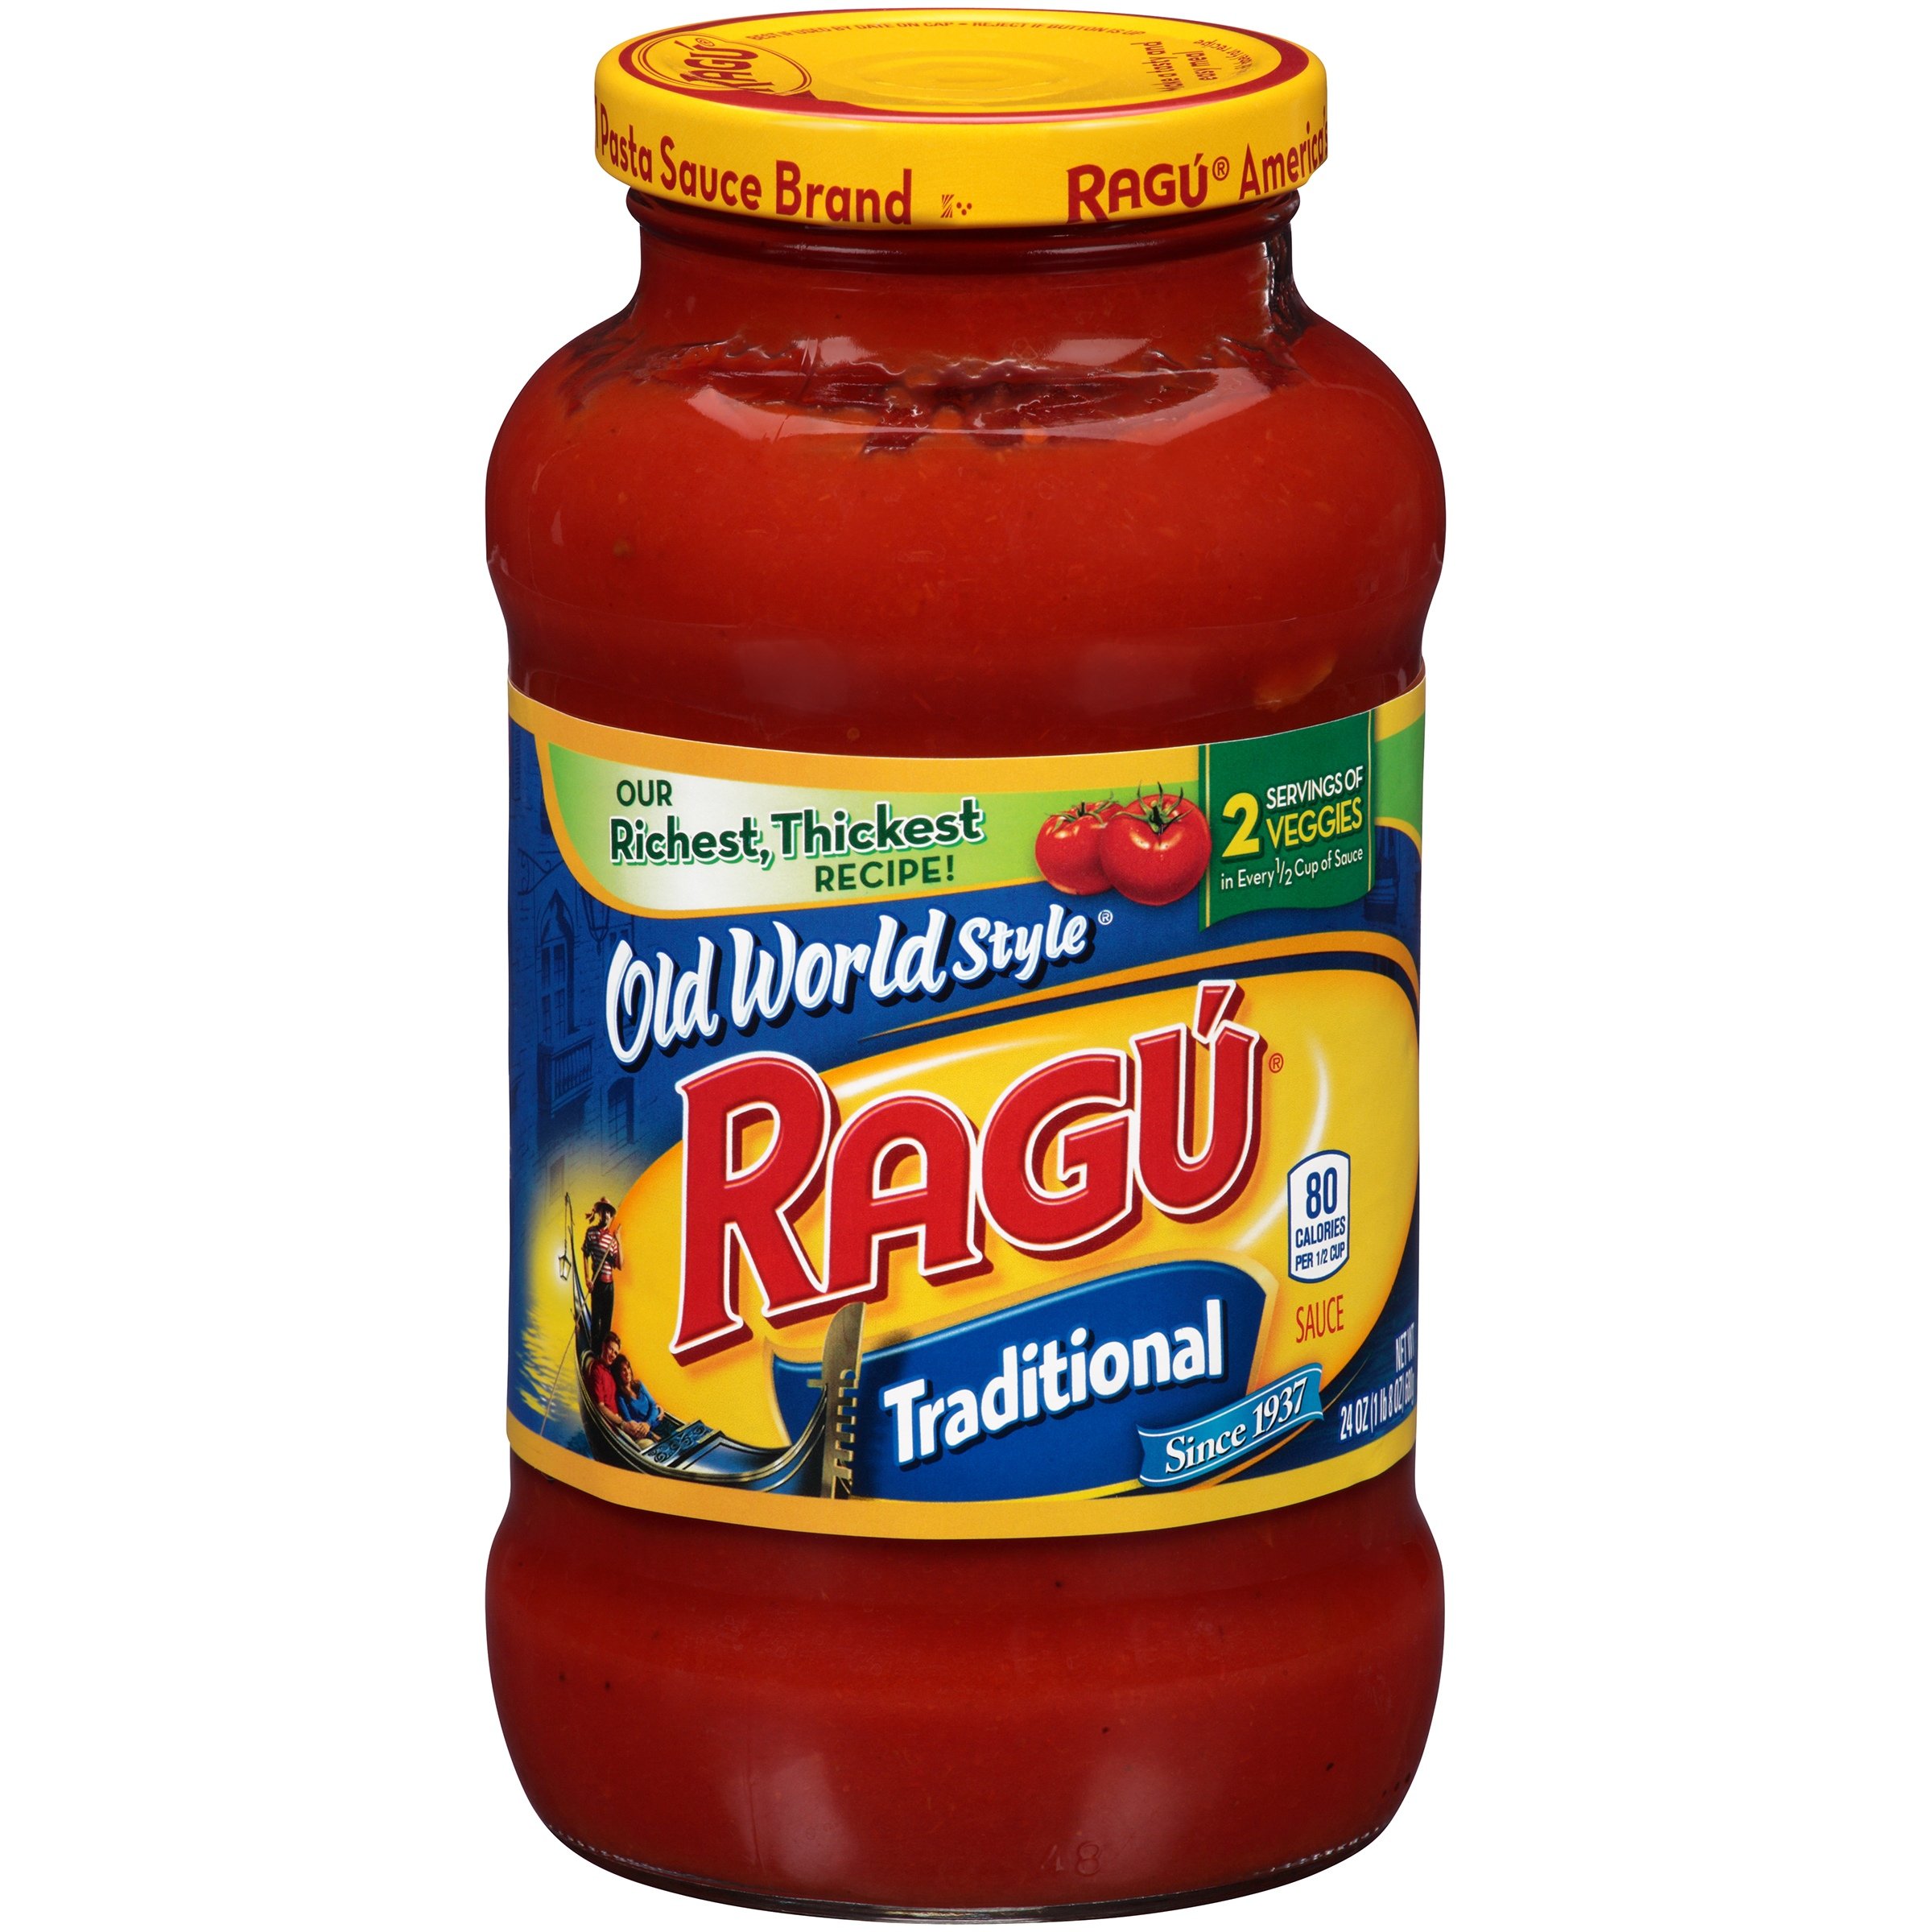 Ragu Old World Style Traditional Sauce 24 oz.